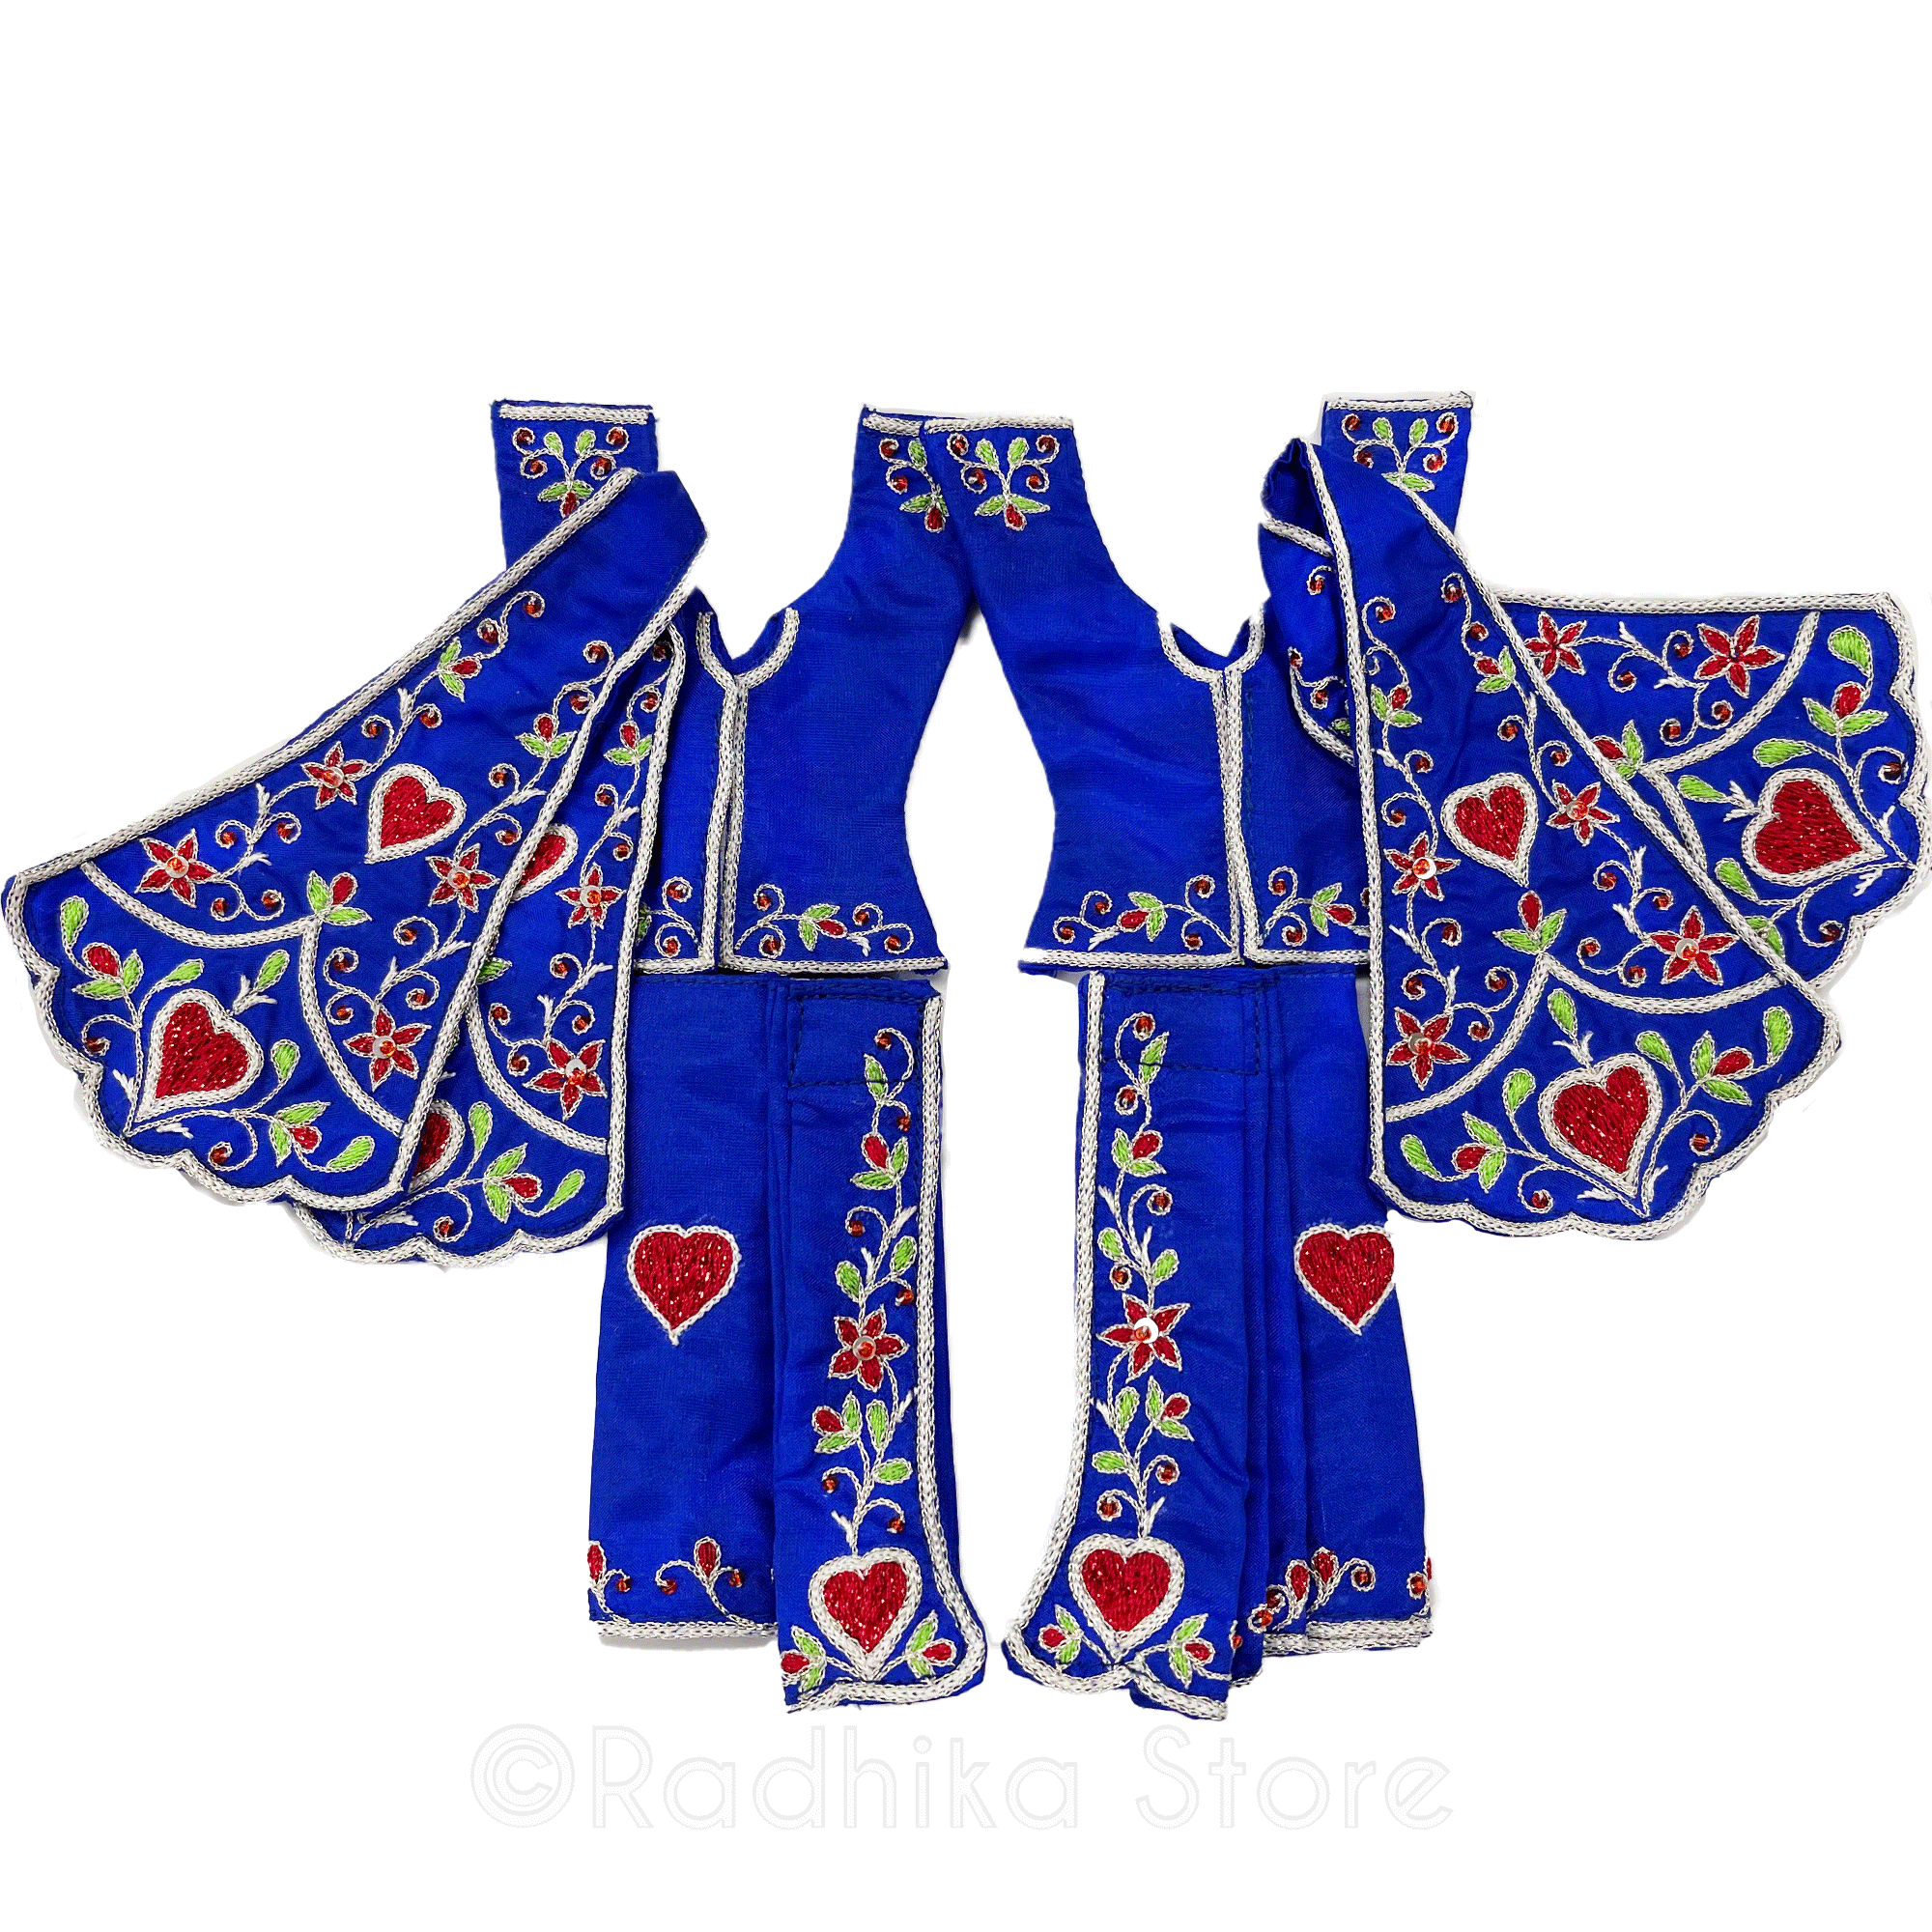 Bhakti Lata Bija - All Silk - Blissful Blue - Gaura Nitai Deity Outfit